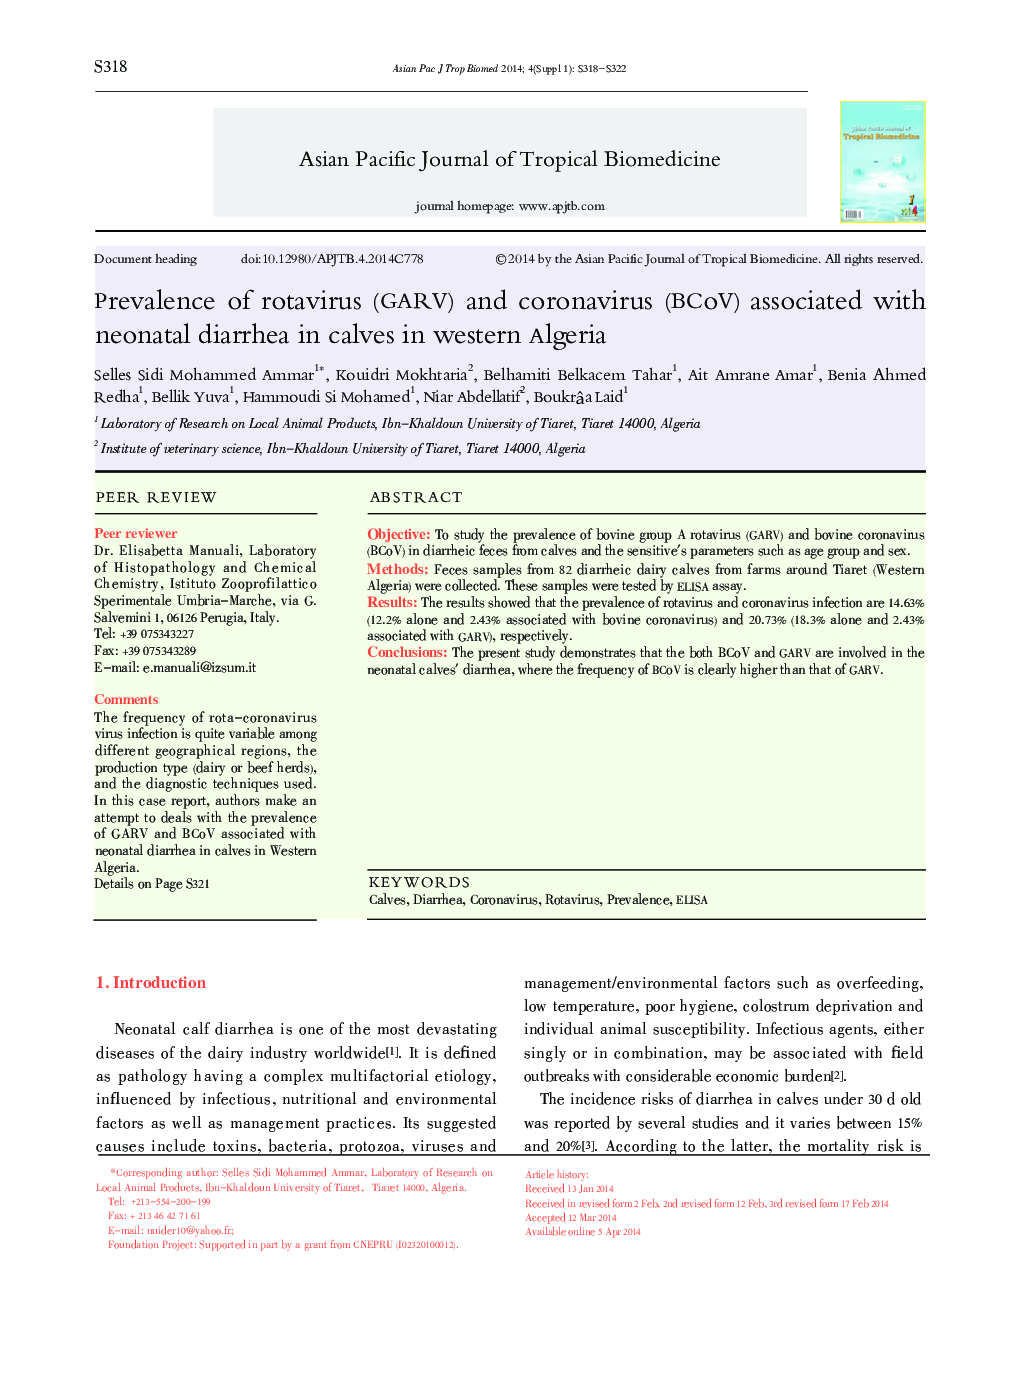 Prevalence of rotavirus (GARV) and coronavirus (BCoV) associated with neonatal diarrhea in calves in western Algeria